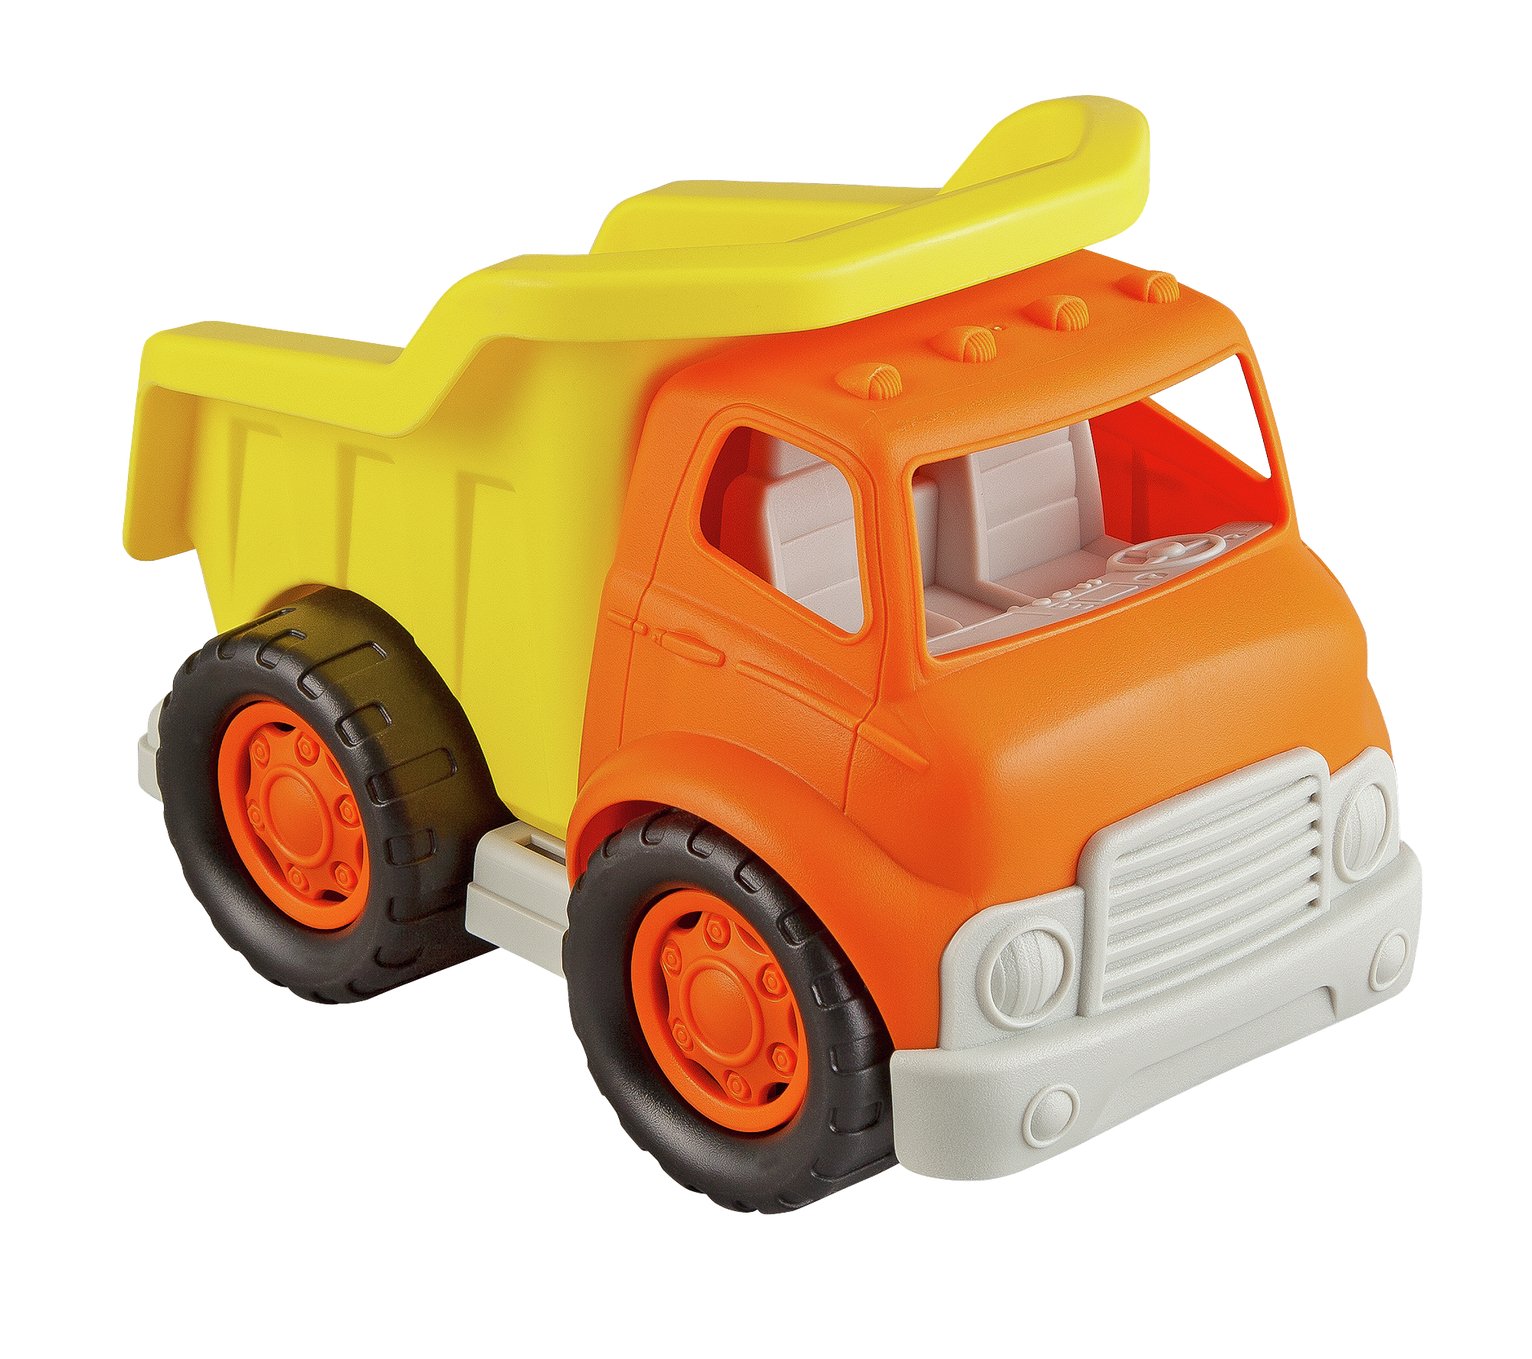 argos toy trucks